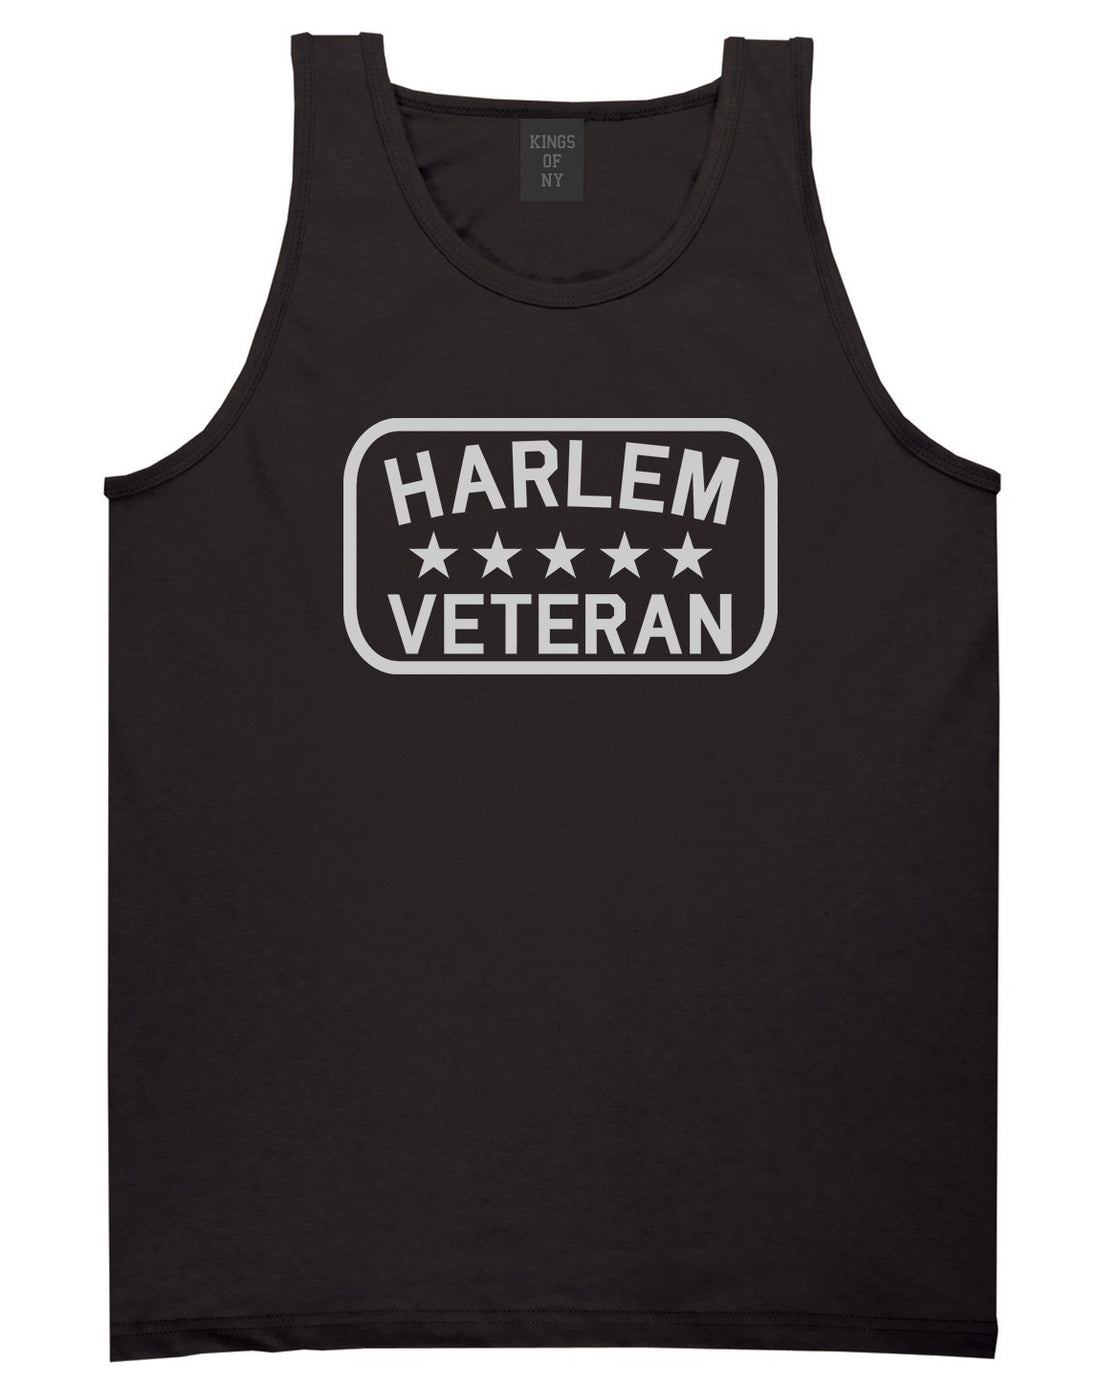 Harlem Veteran Mens Tank Top Shirt Black